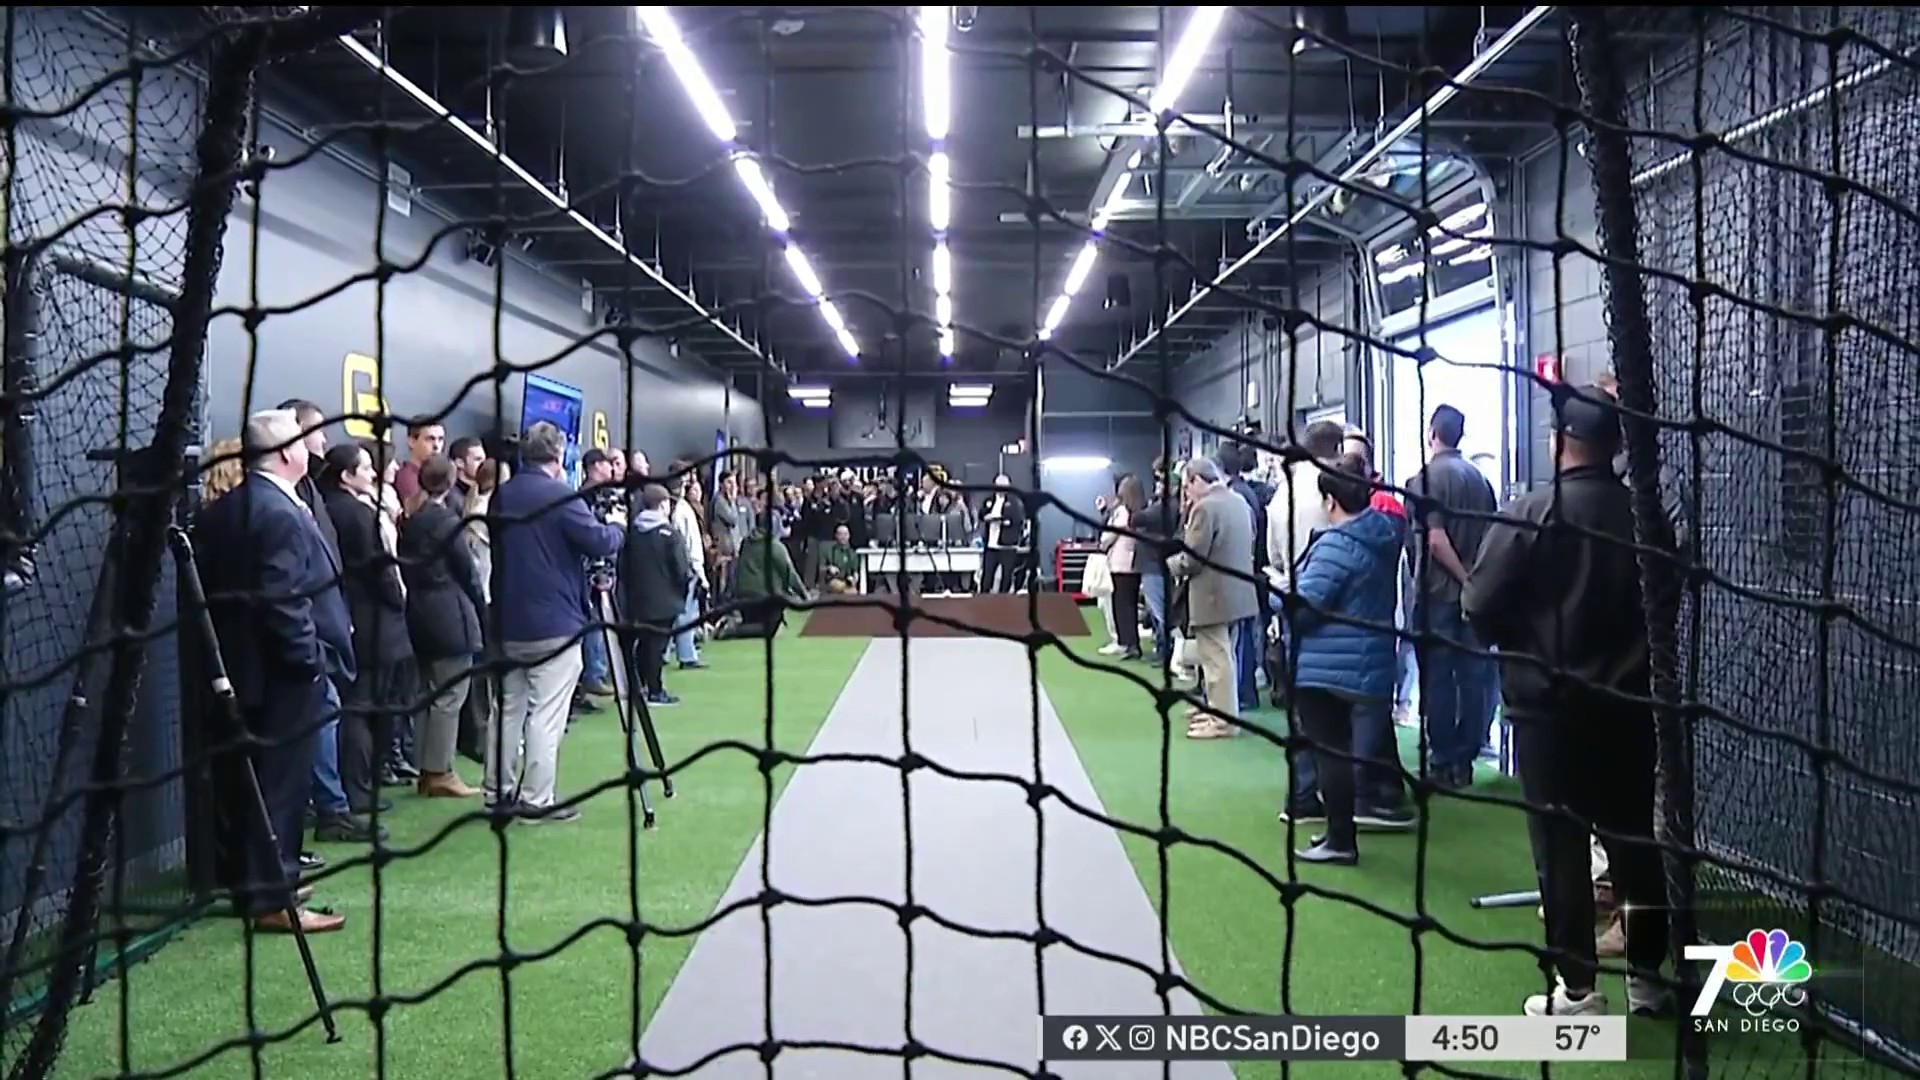 ‘Rocket science applied to baseball:' A trip inside San Diego Padres
and PLNU's new biomechanics lab